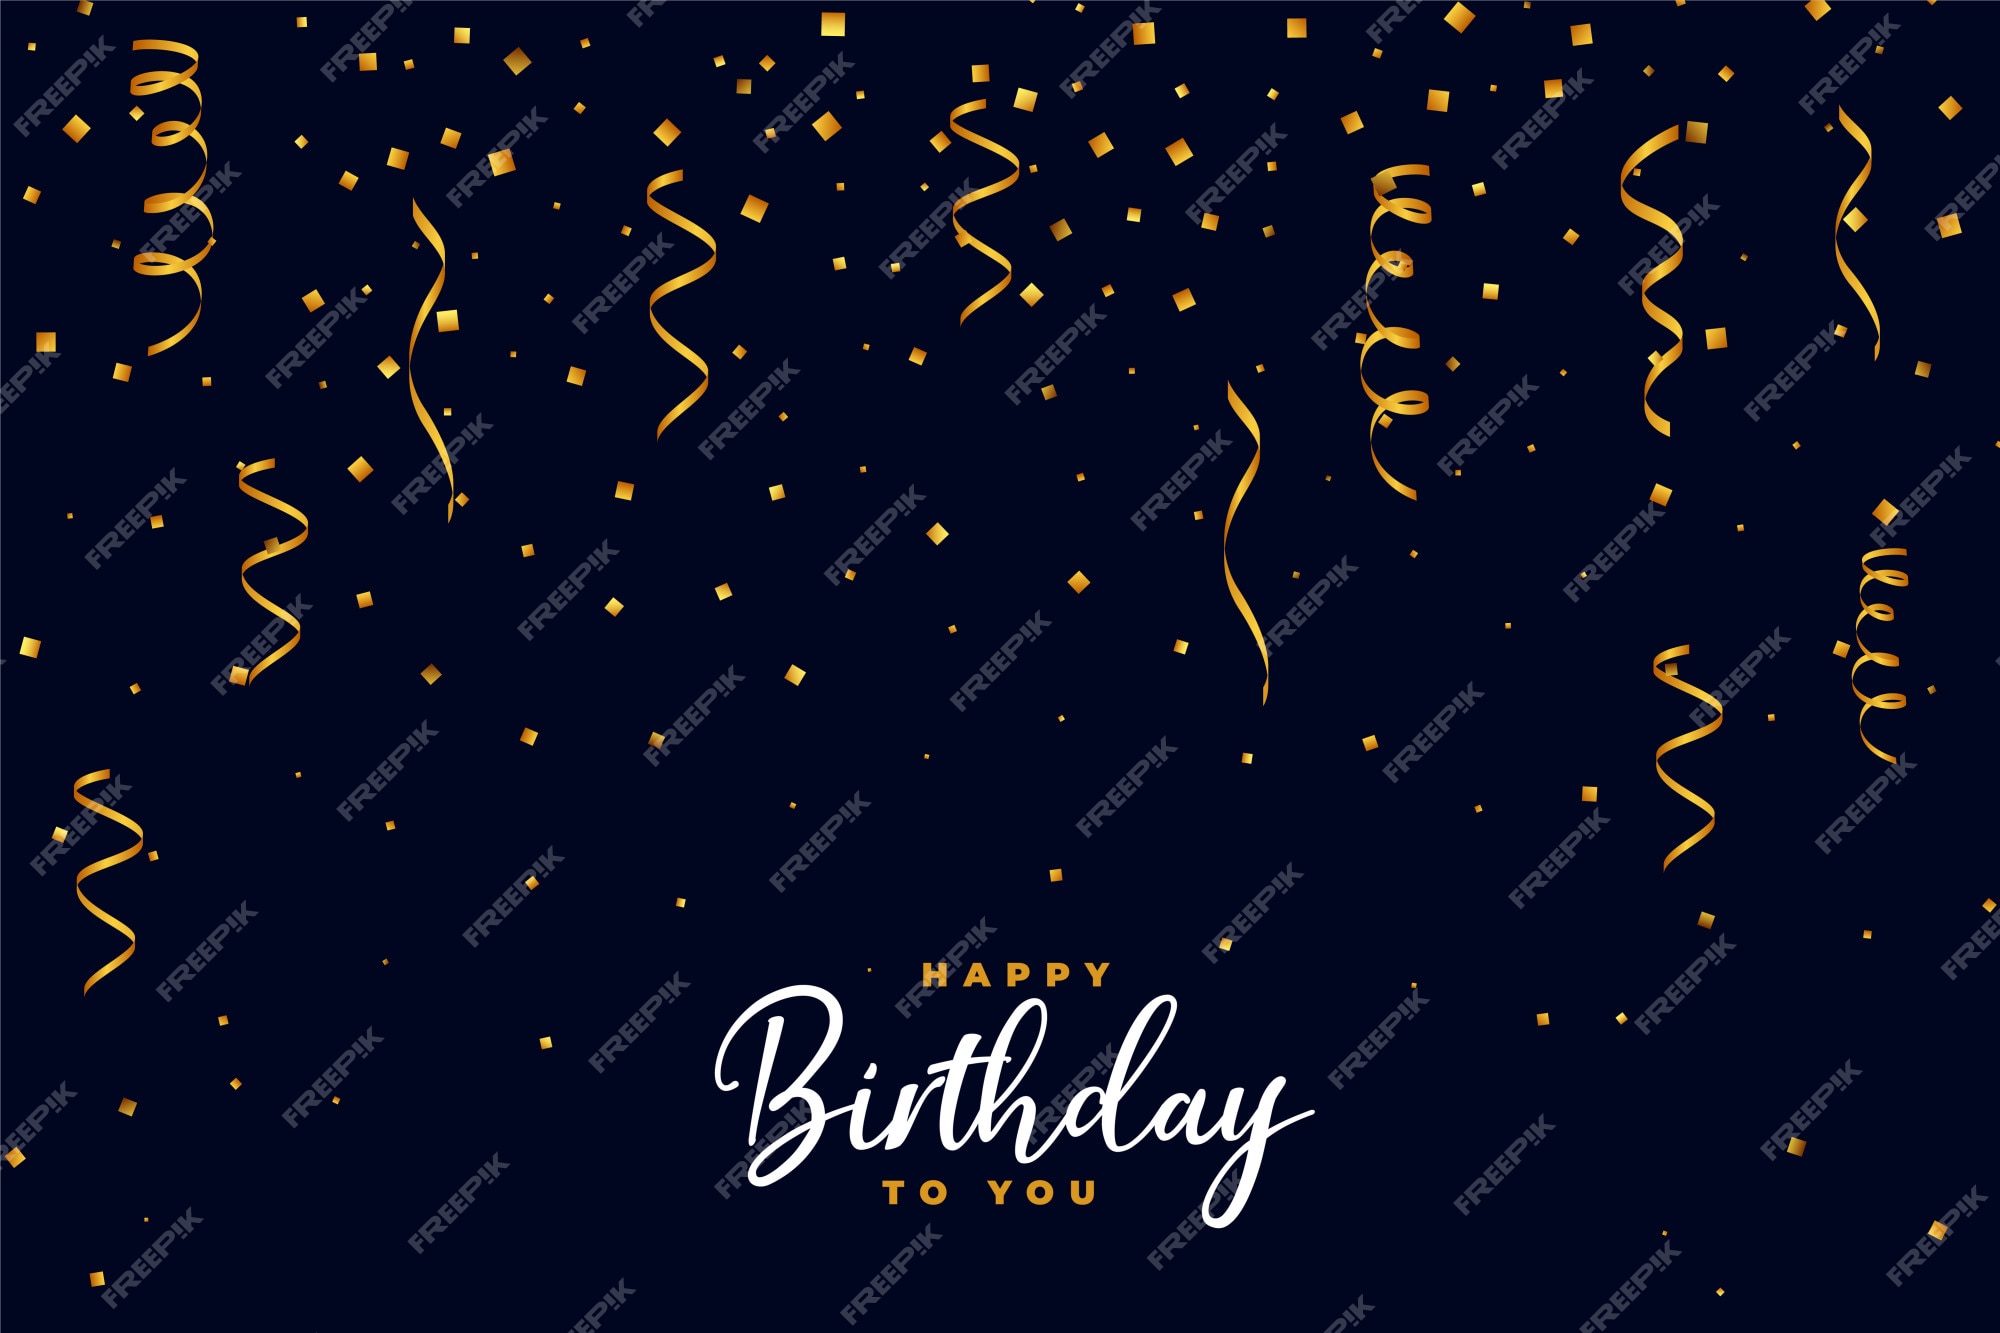 Free Vector | Falling golden confetti happy birthday background design